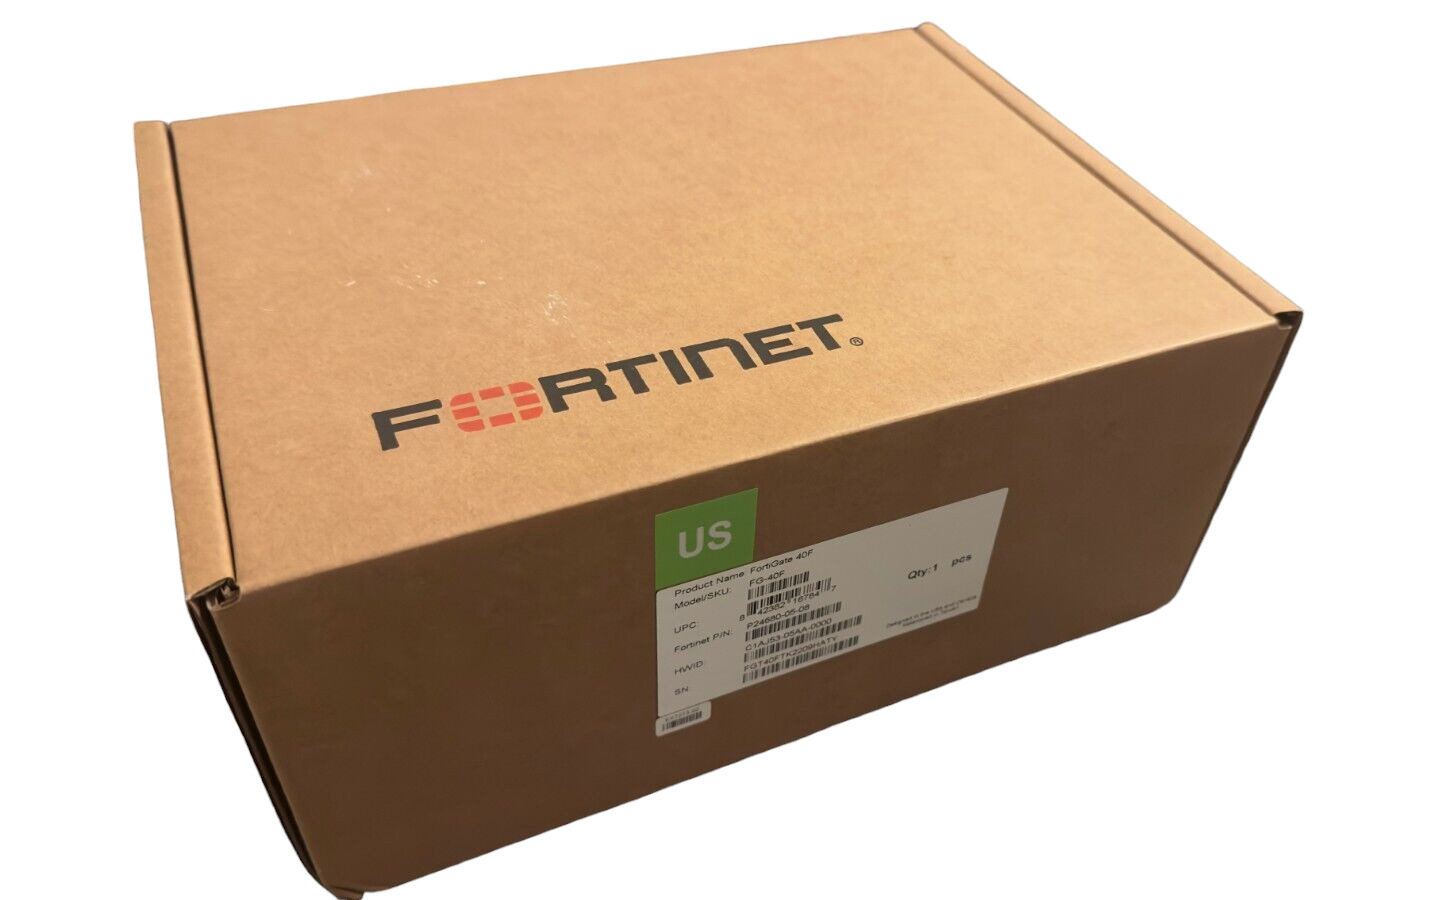 FORTINET FG-40F FortiGate FG-40F Network Security Firewall Appliance